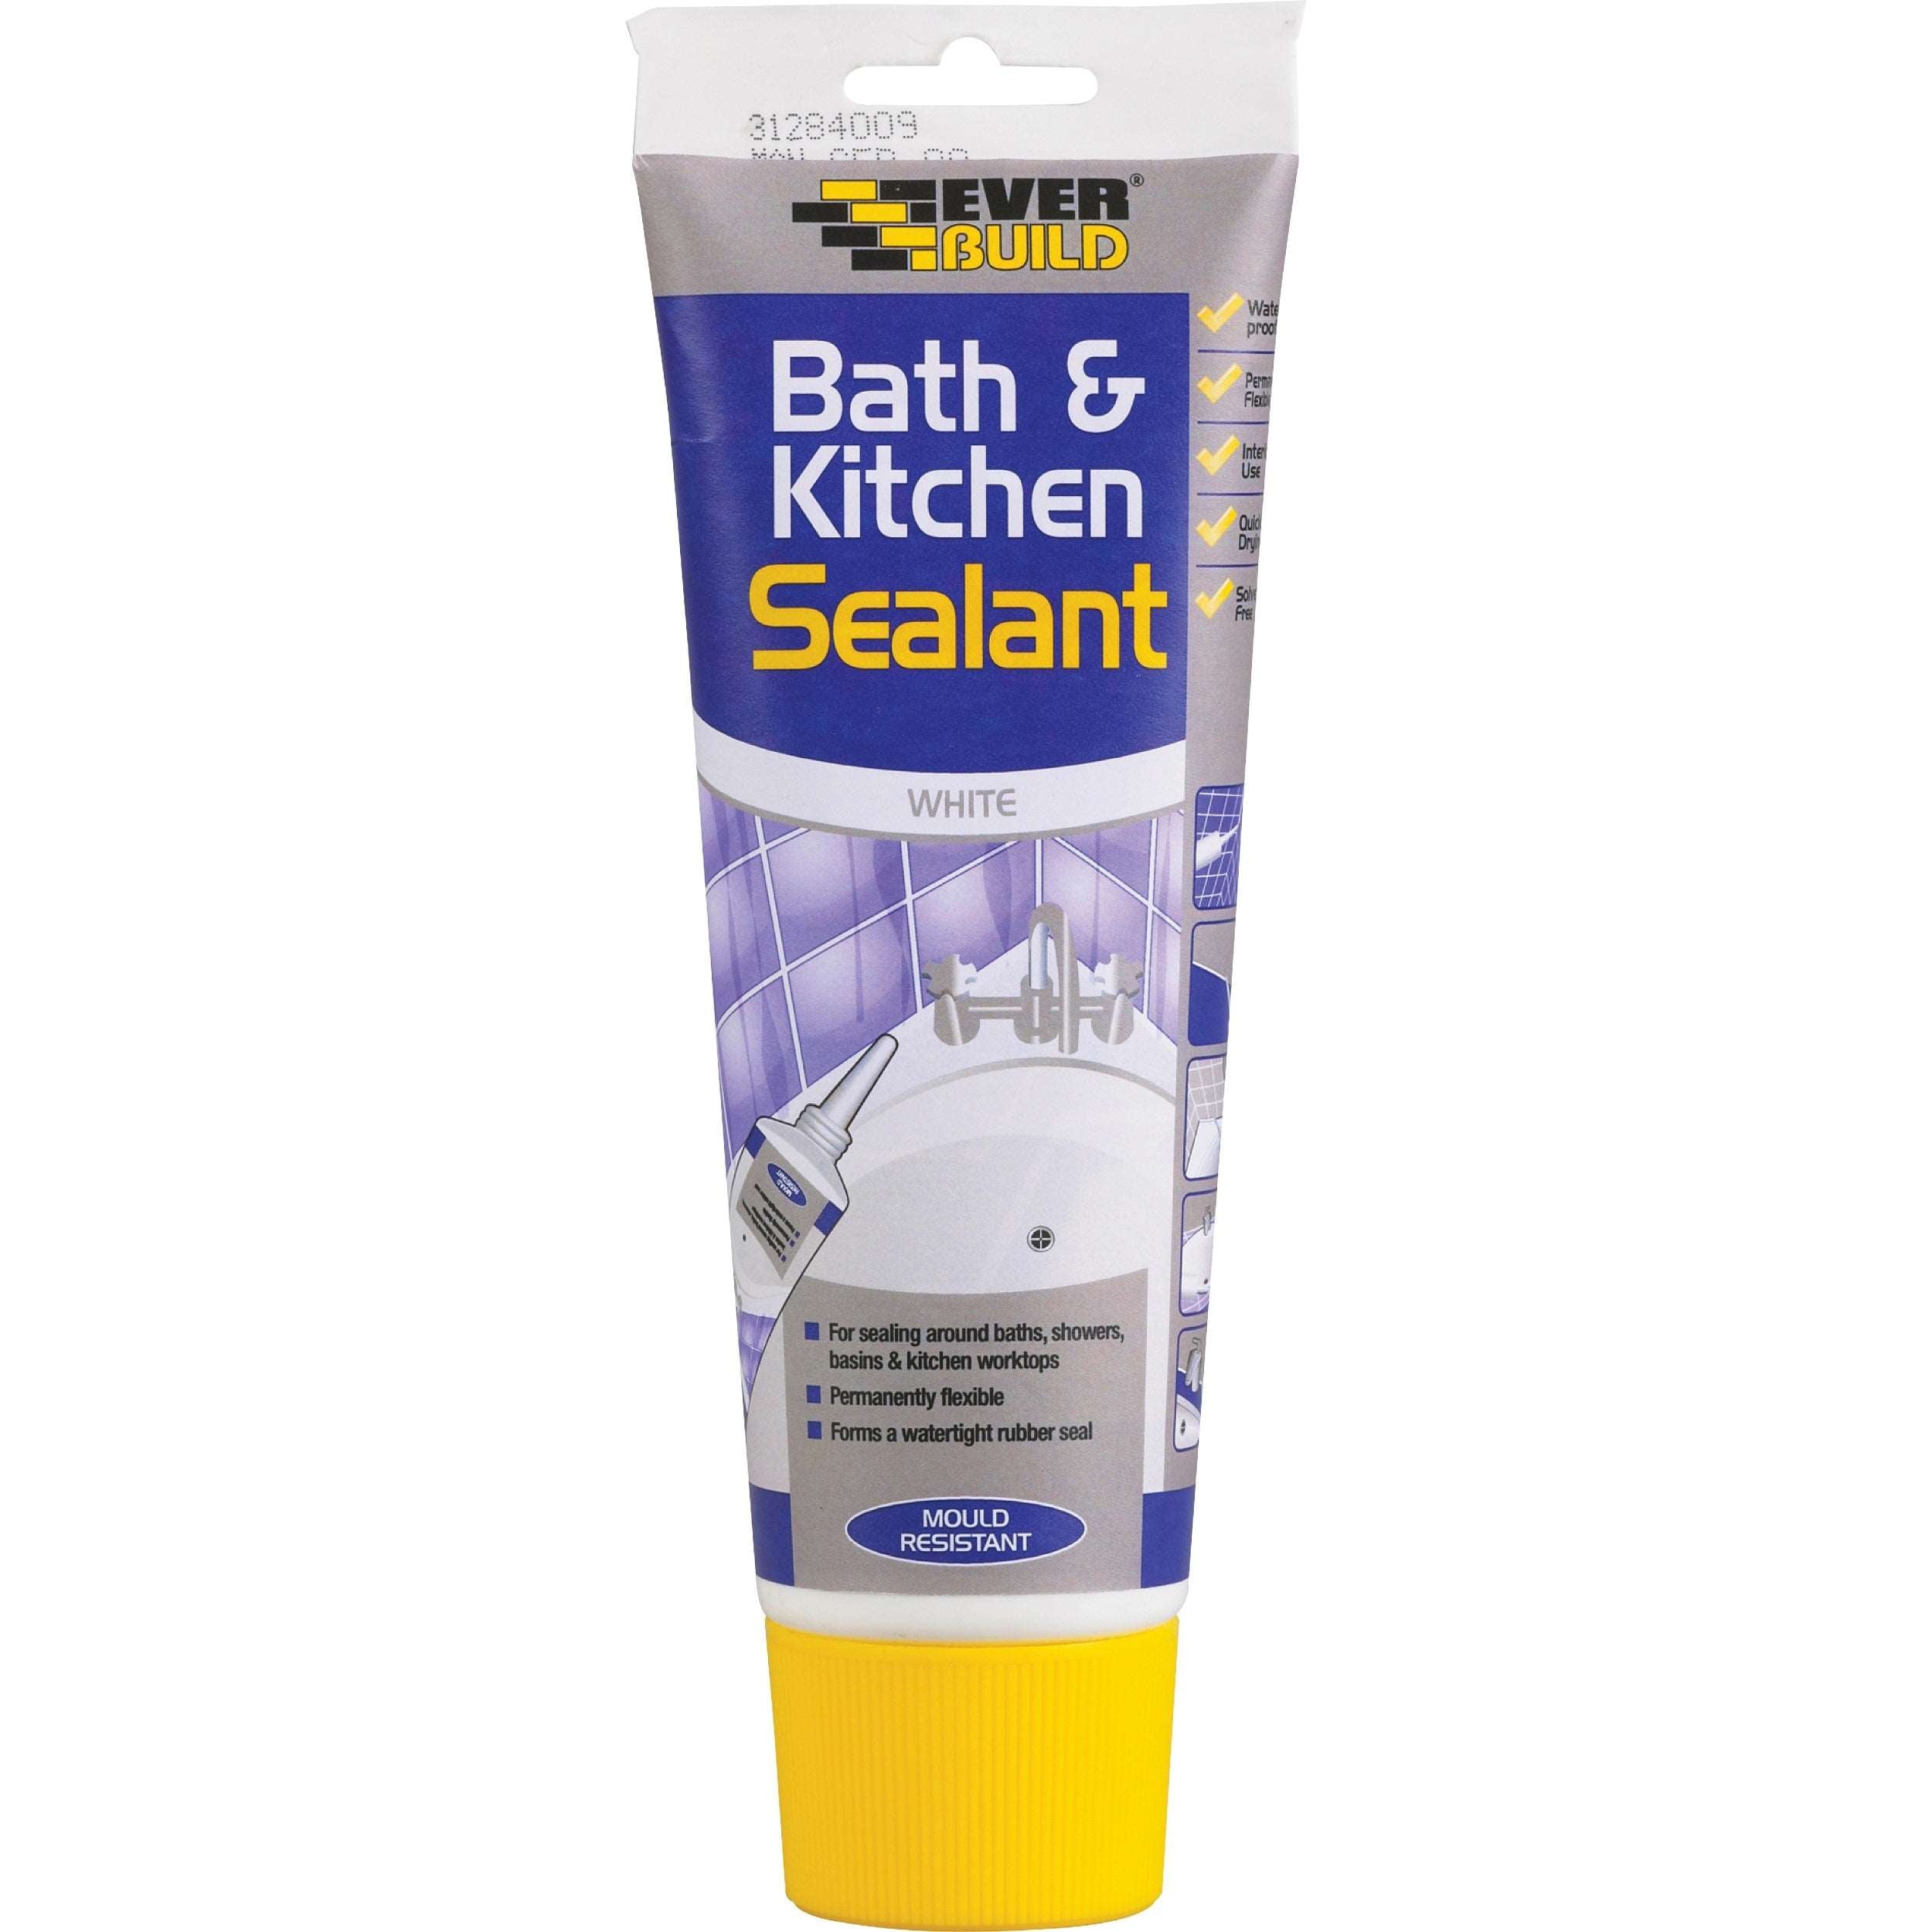 Everbuild Bath and Kitchen Acrylic Sealant, White, 200 ml